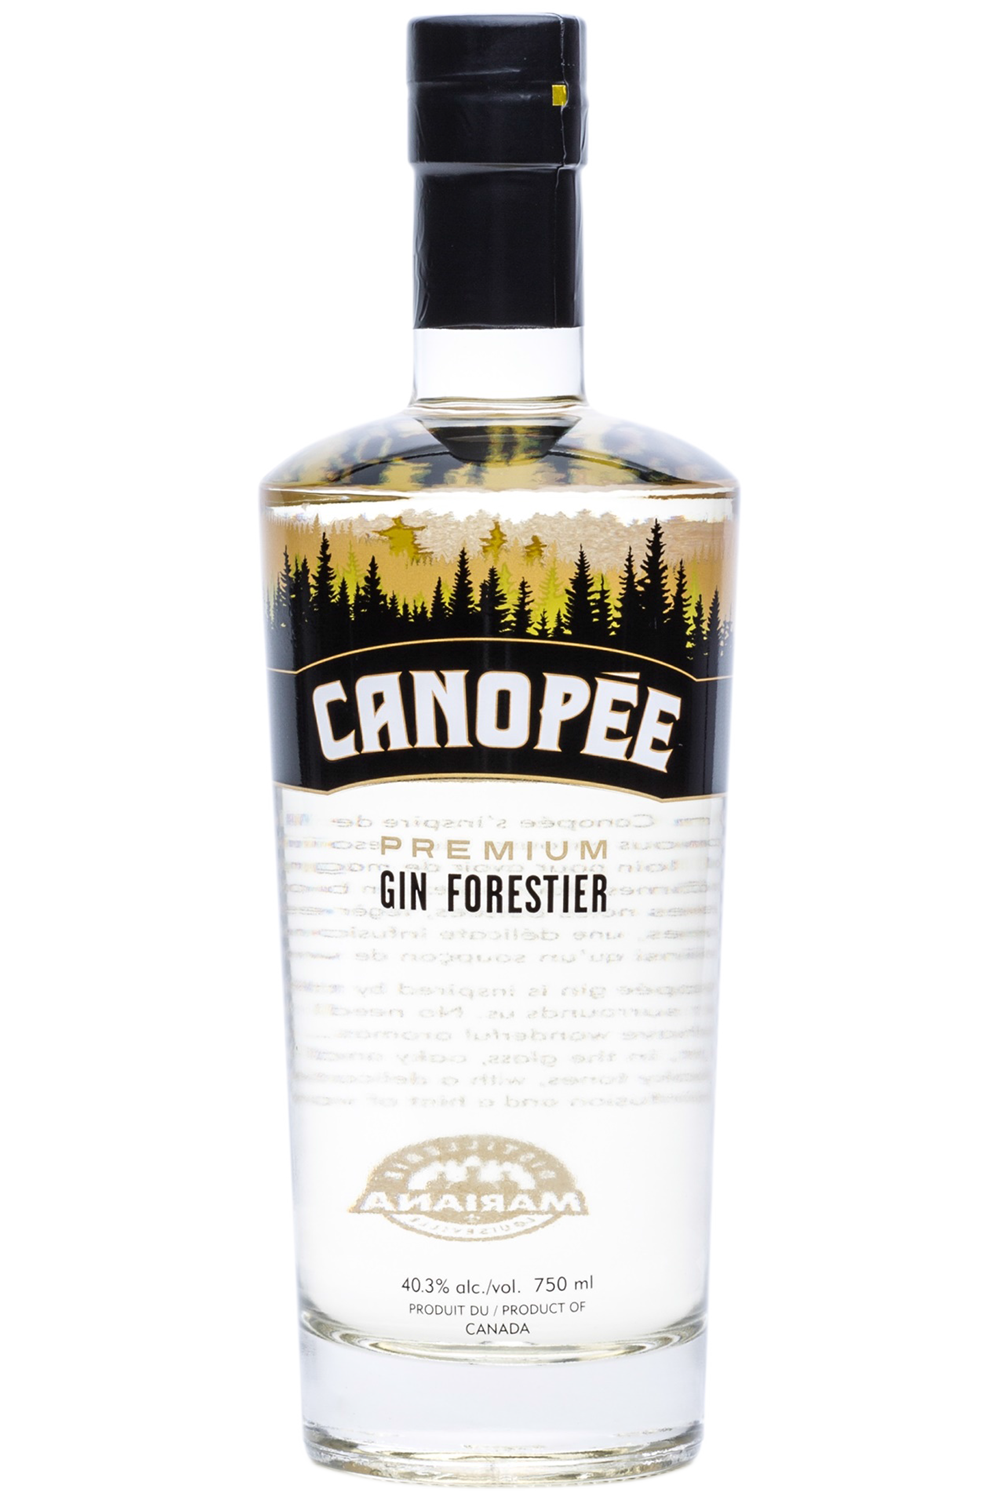 Canopée gin forestier 750ml.